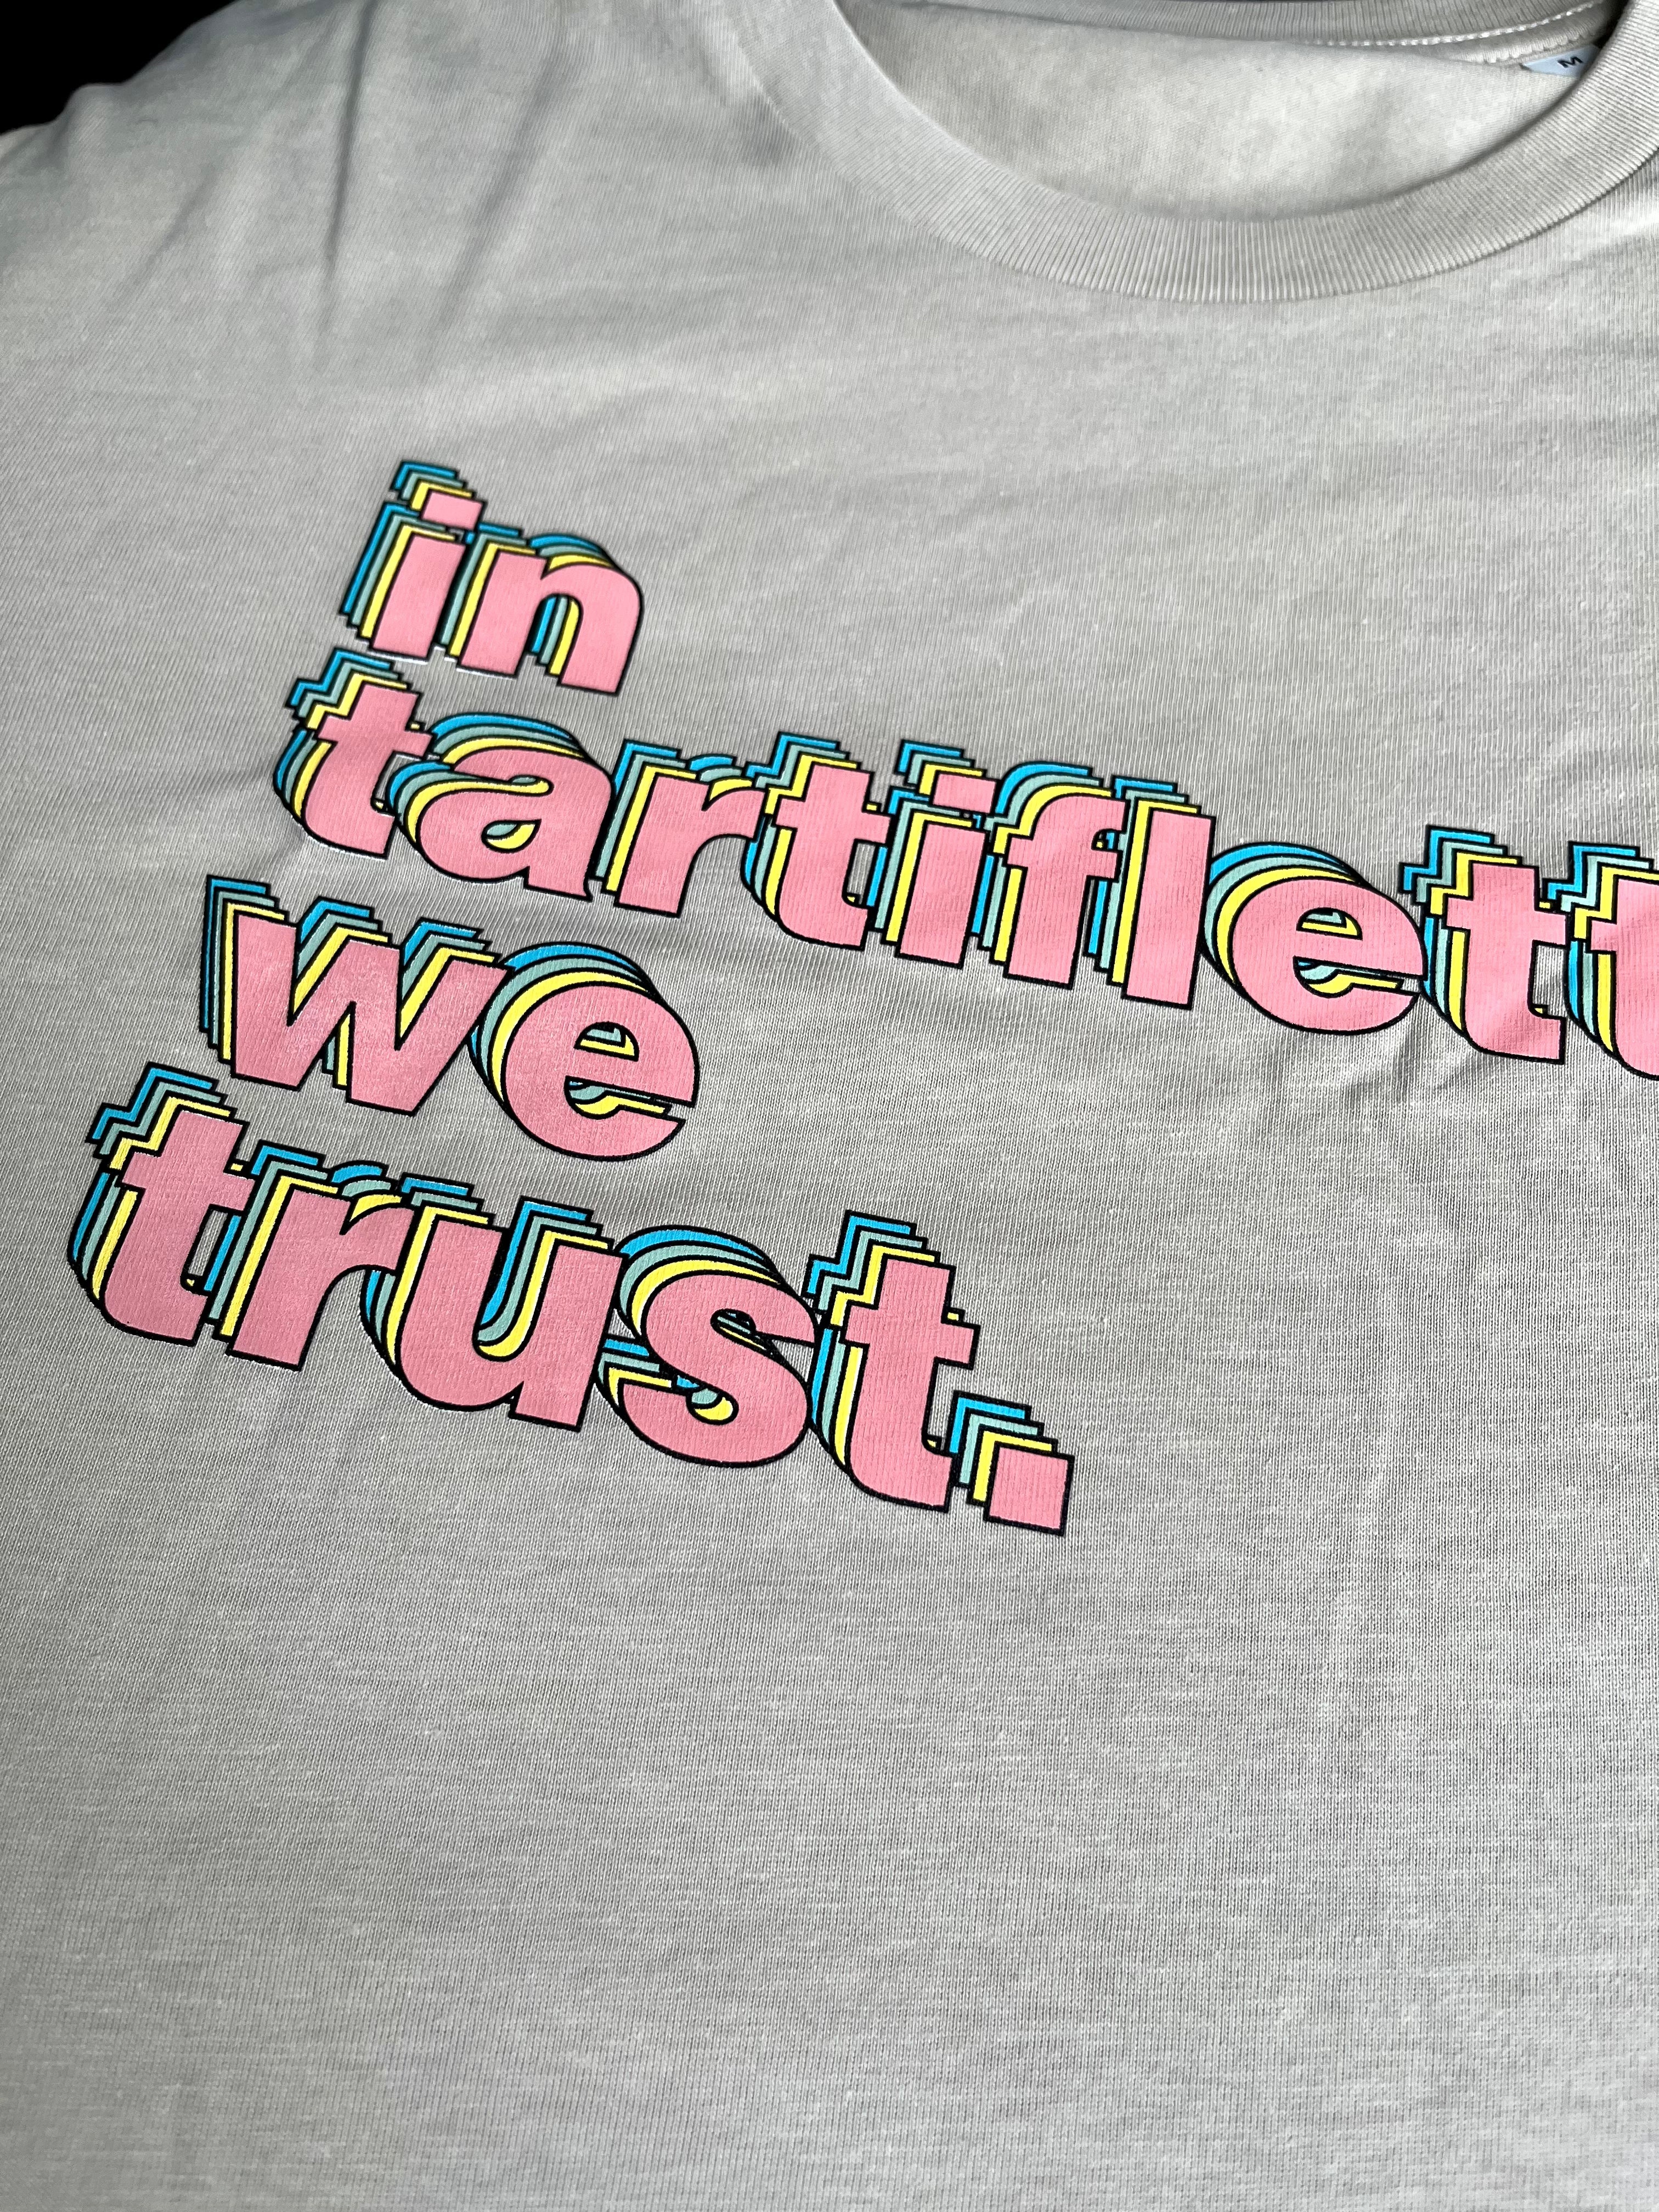 T-shirt In Tartiflette We Trust rétro